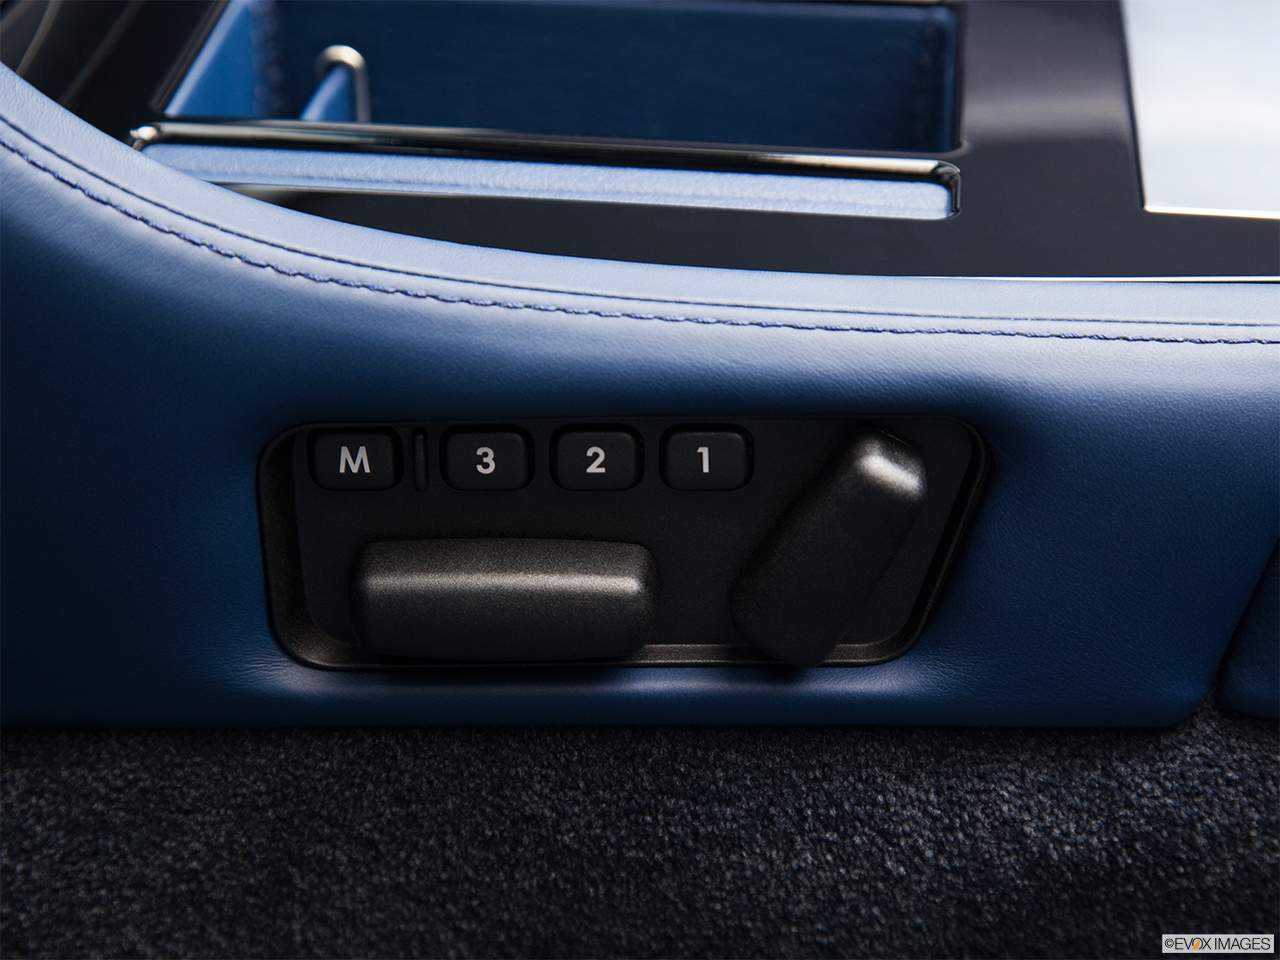 2011 Aston Martin DBS Volante Seat Adjustment Controllers. 